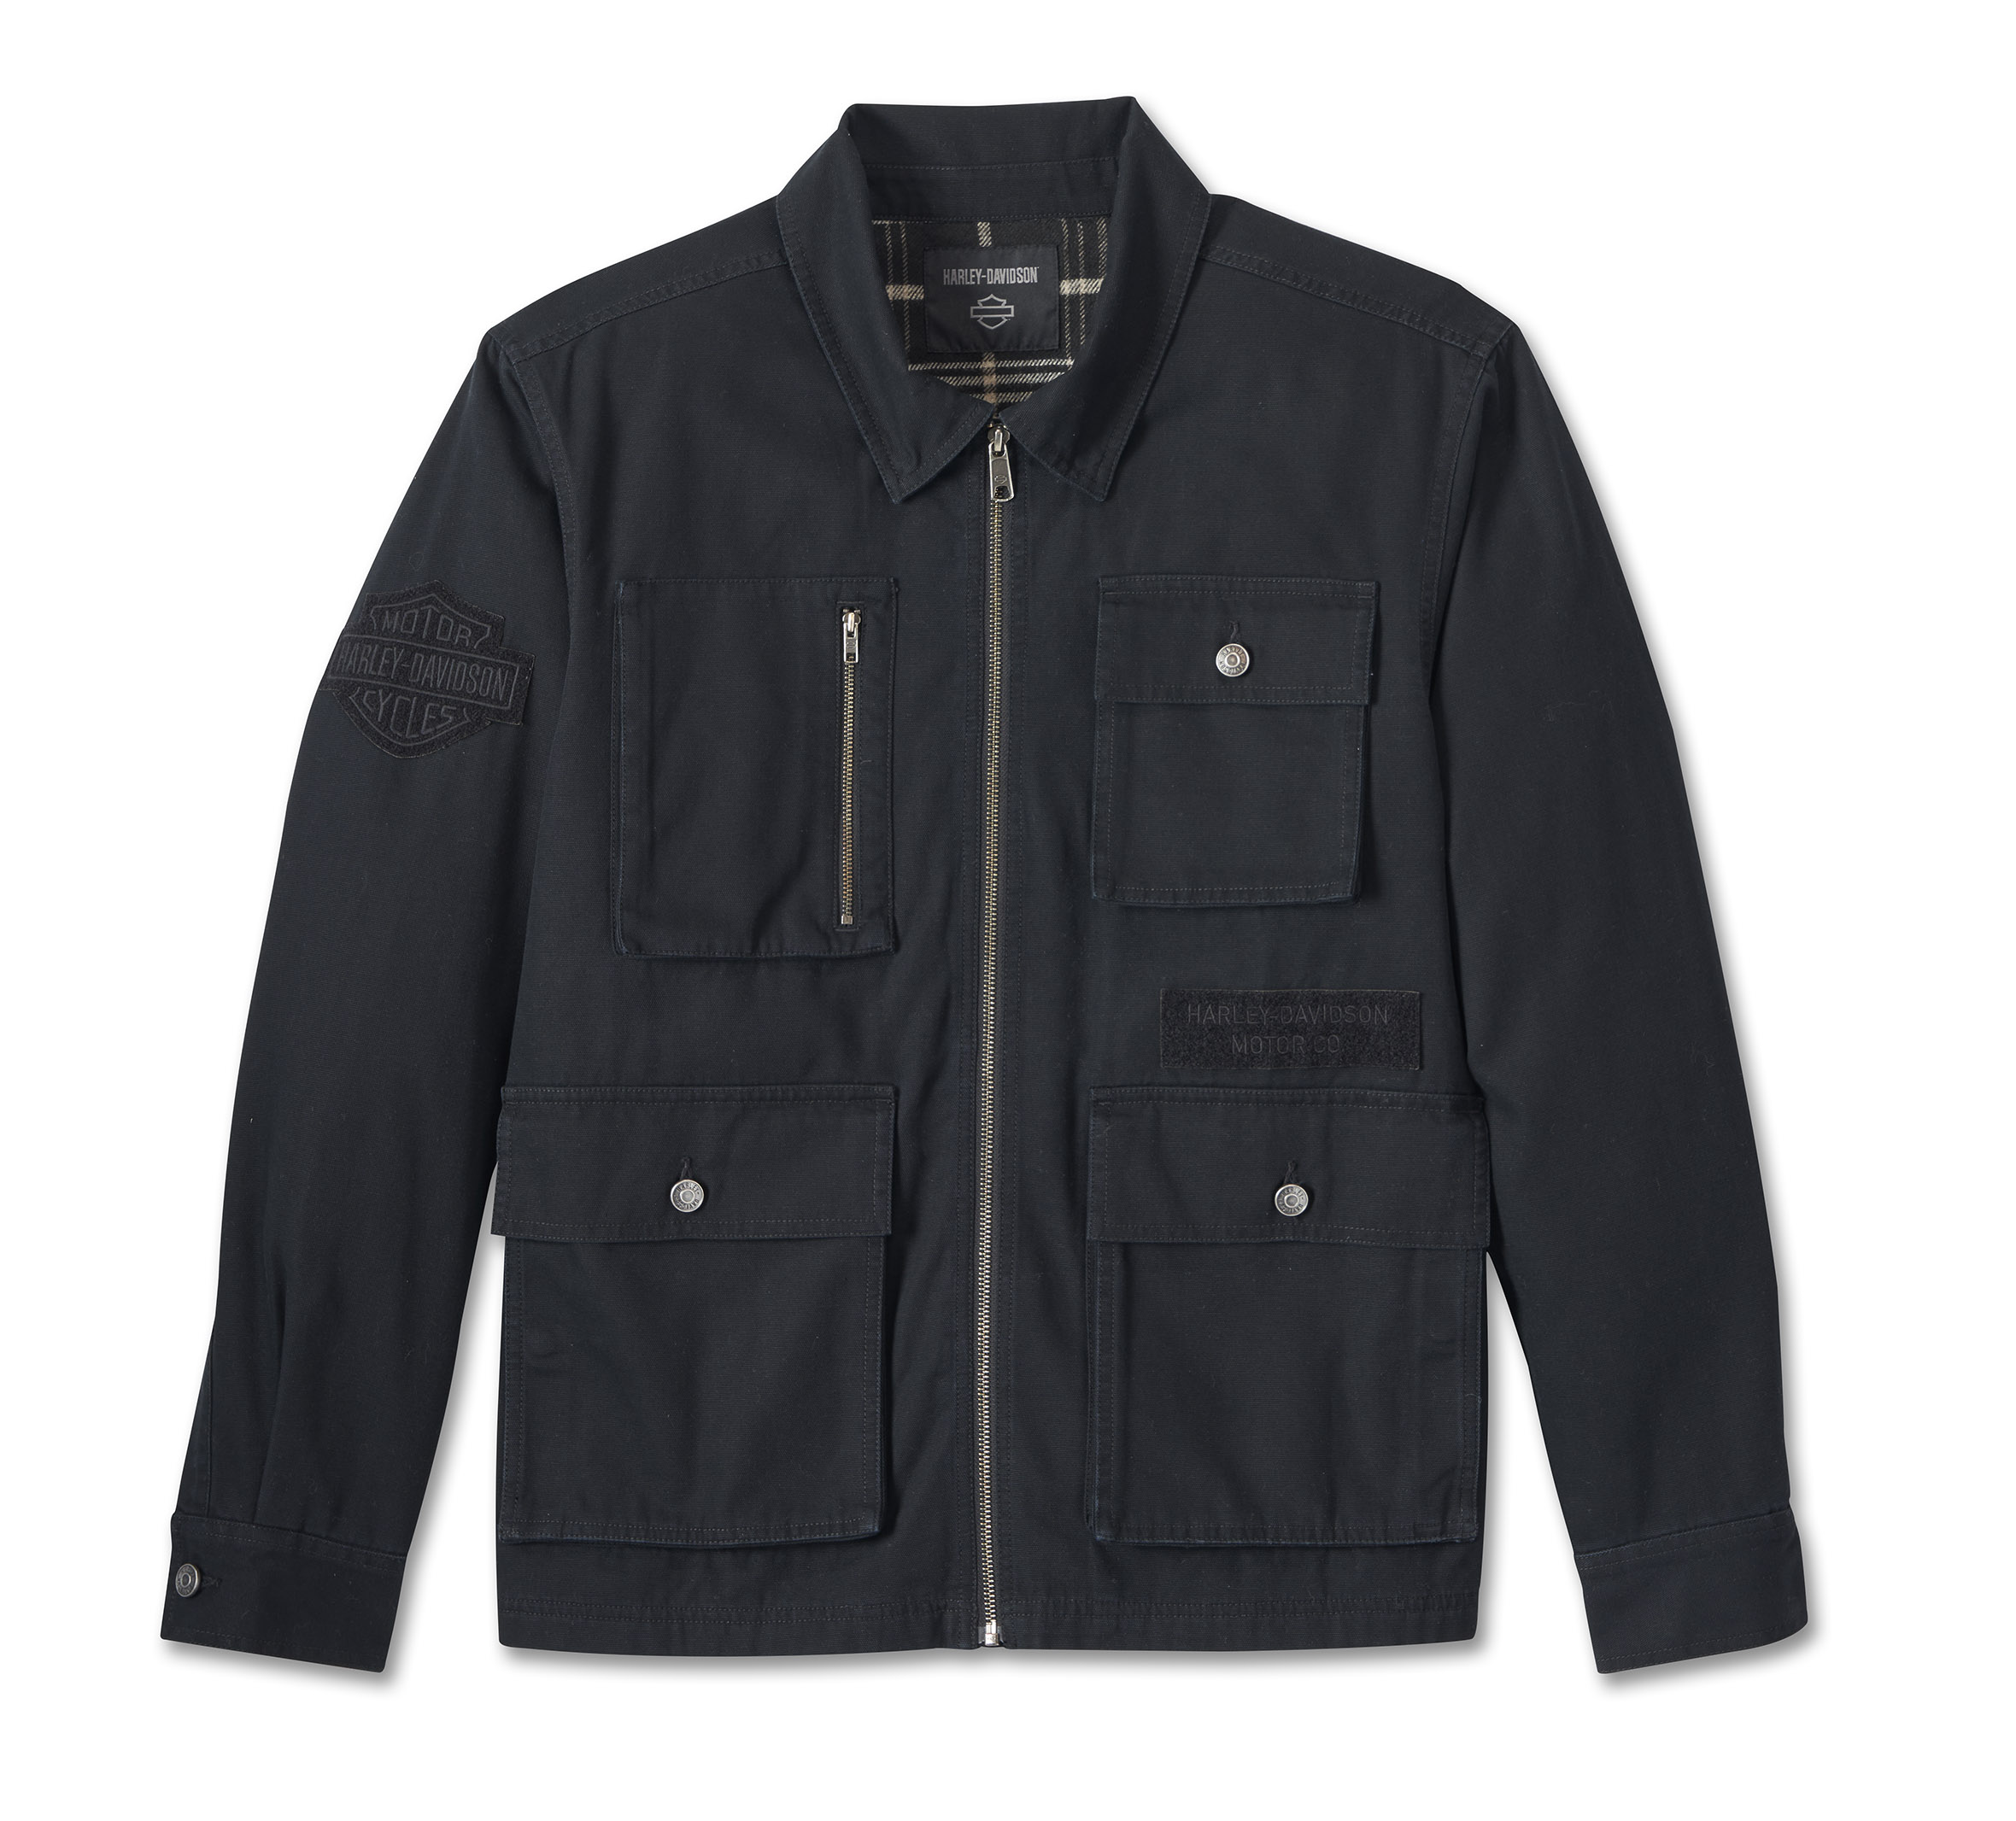 Buy Black Smart Four Pocket Jacket - XL, Coats and jackets